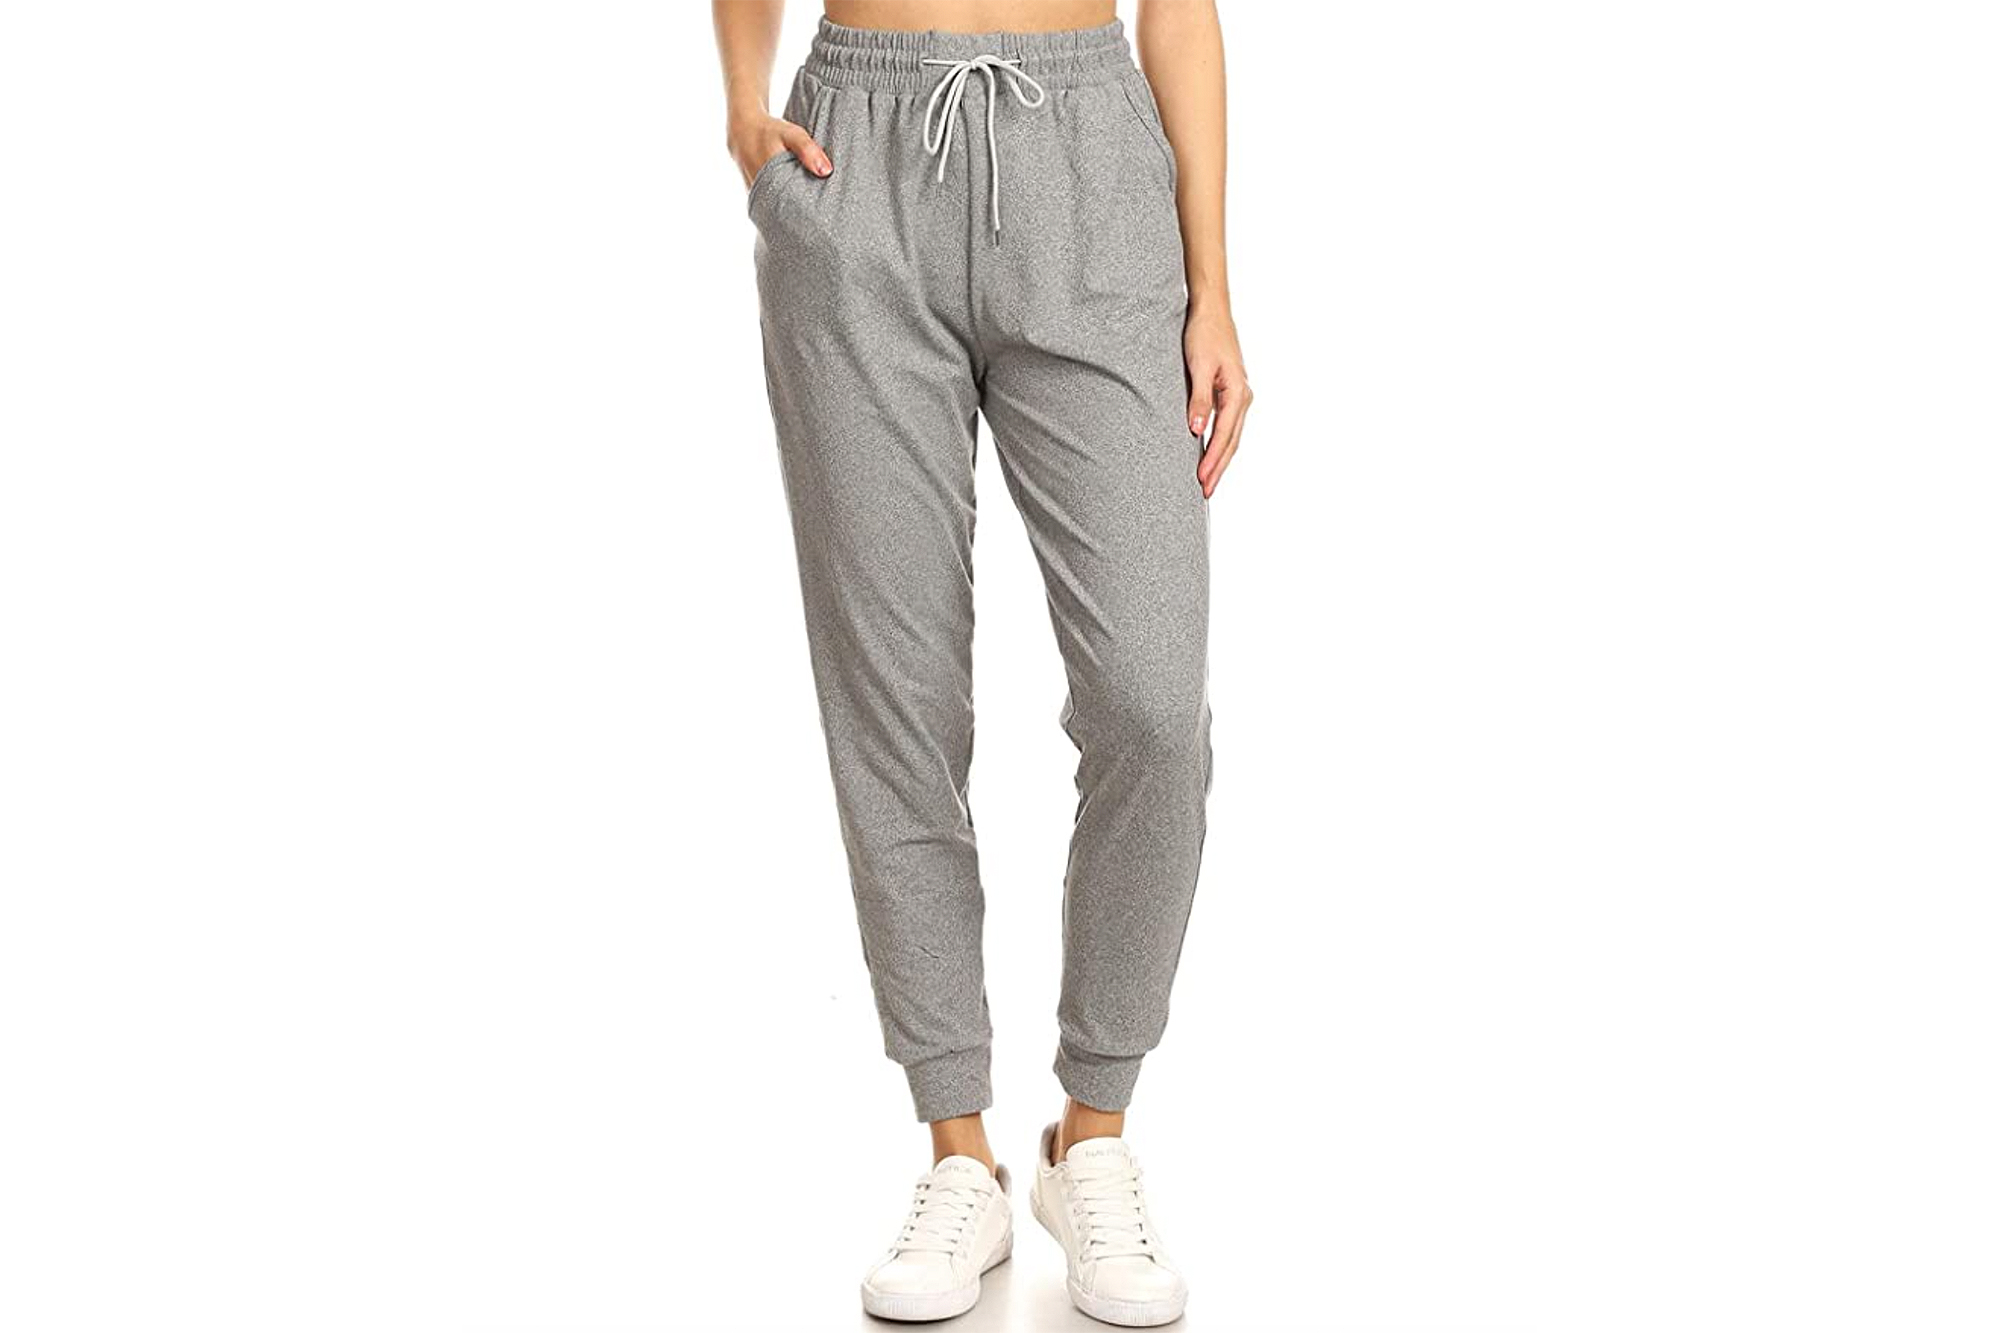 https://www.usmagazine.com/wp-content/uploads/2021/02/Leggings-Depot-Womens-Printed-Solid-Activewear-Jogger-Track-Cuff-Sweatpants.jpg?quality=86&strip=all